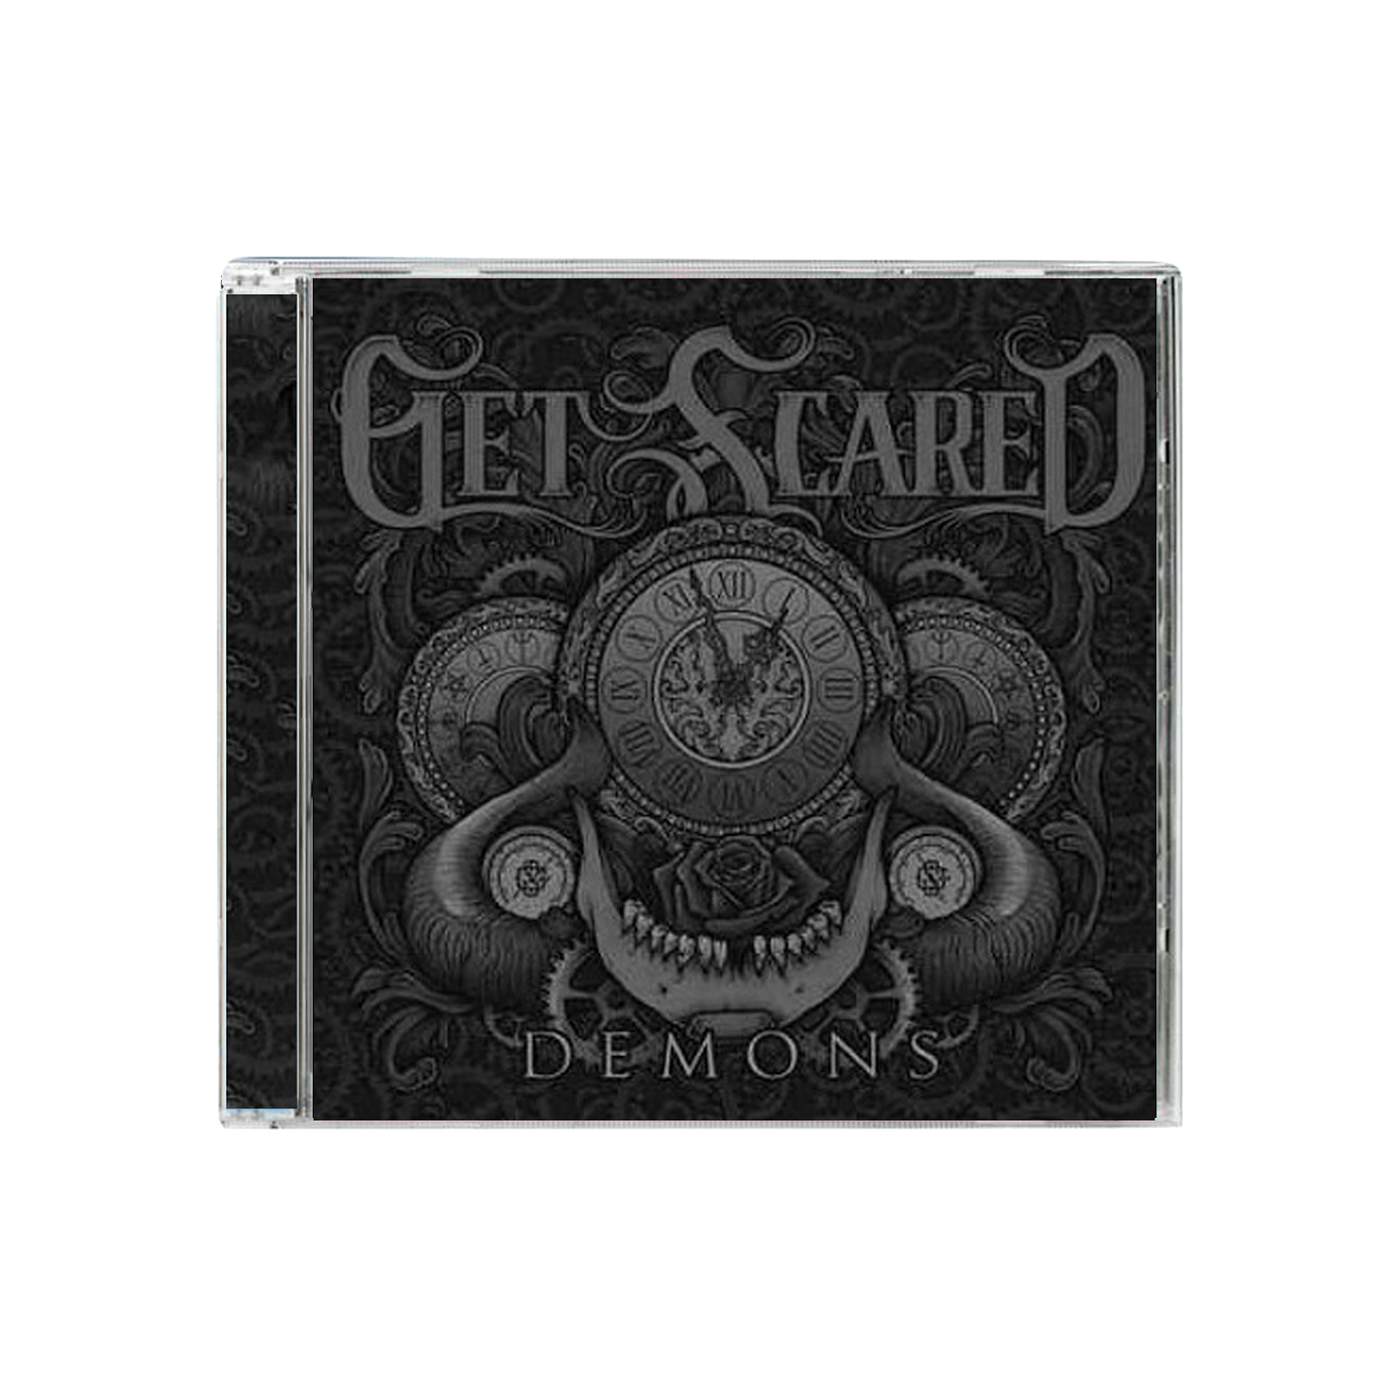 Get Scared Demons CD